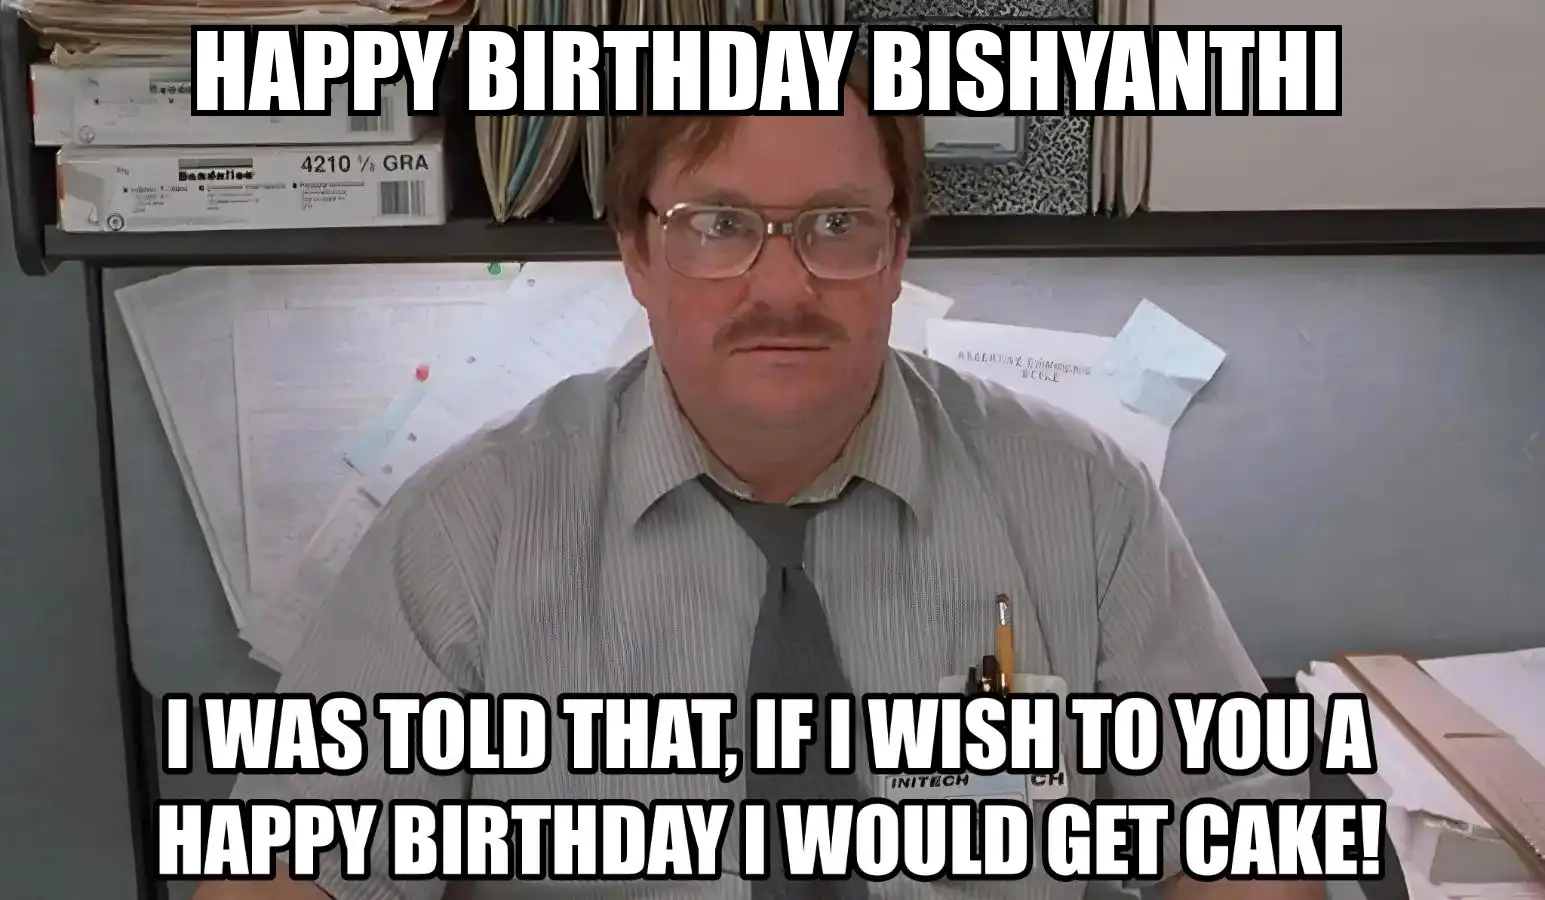 Happy Birthday Bishyanthi I Would Get A Cake Meme